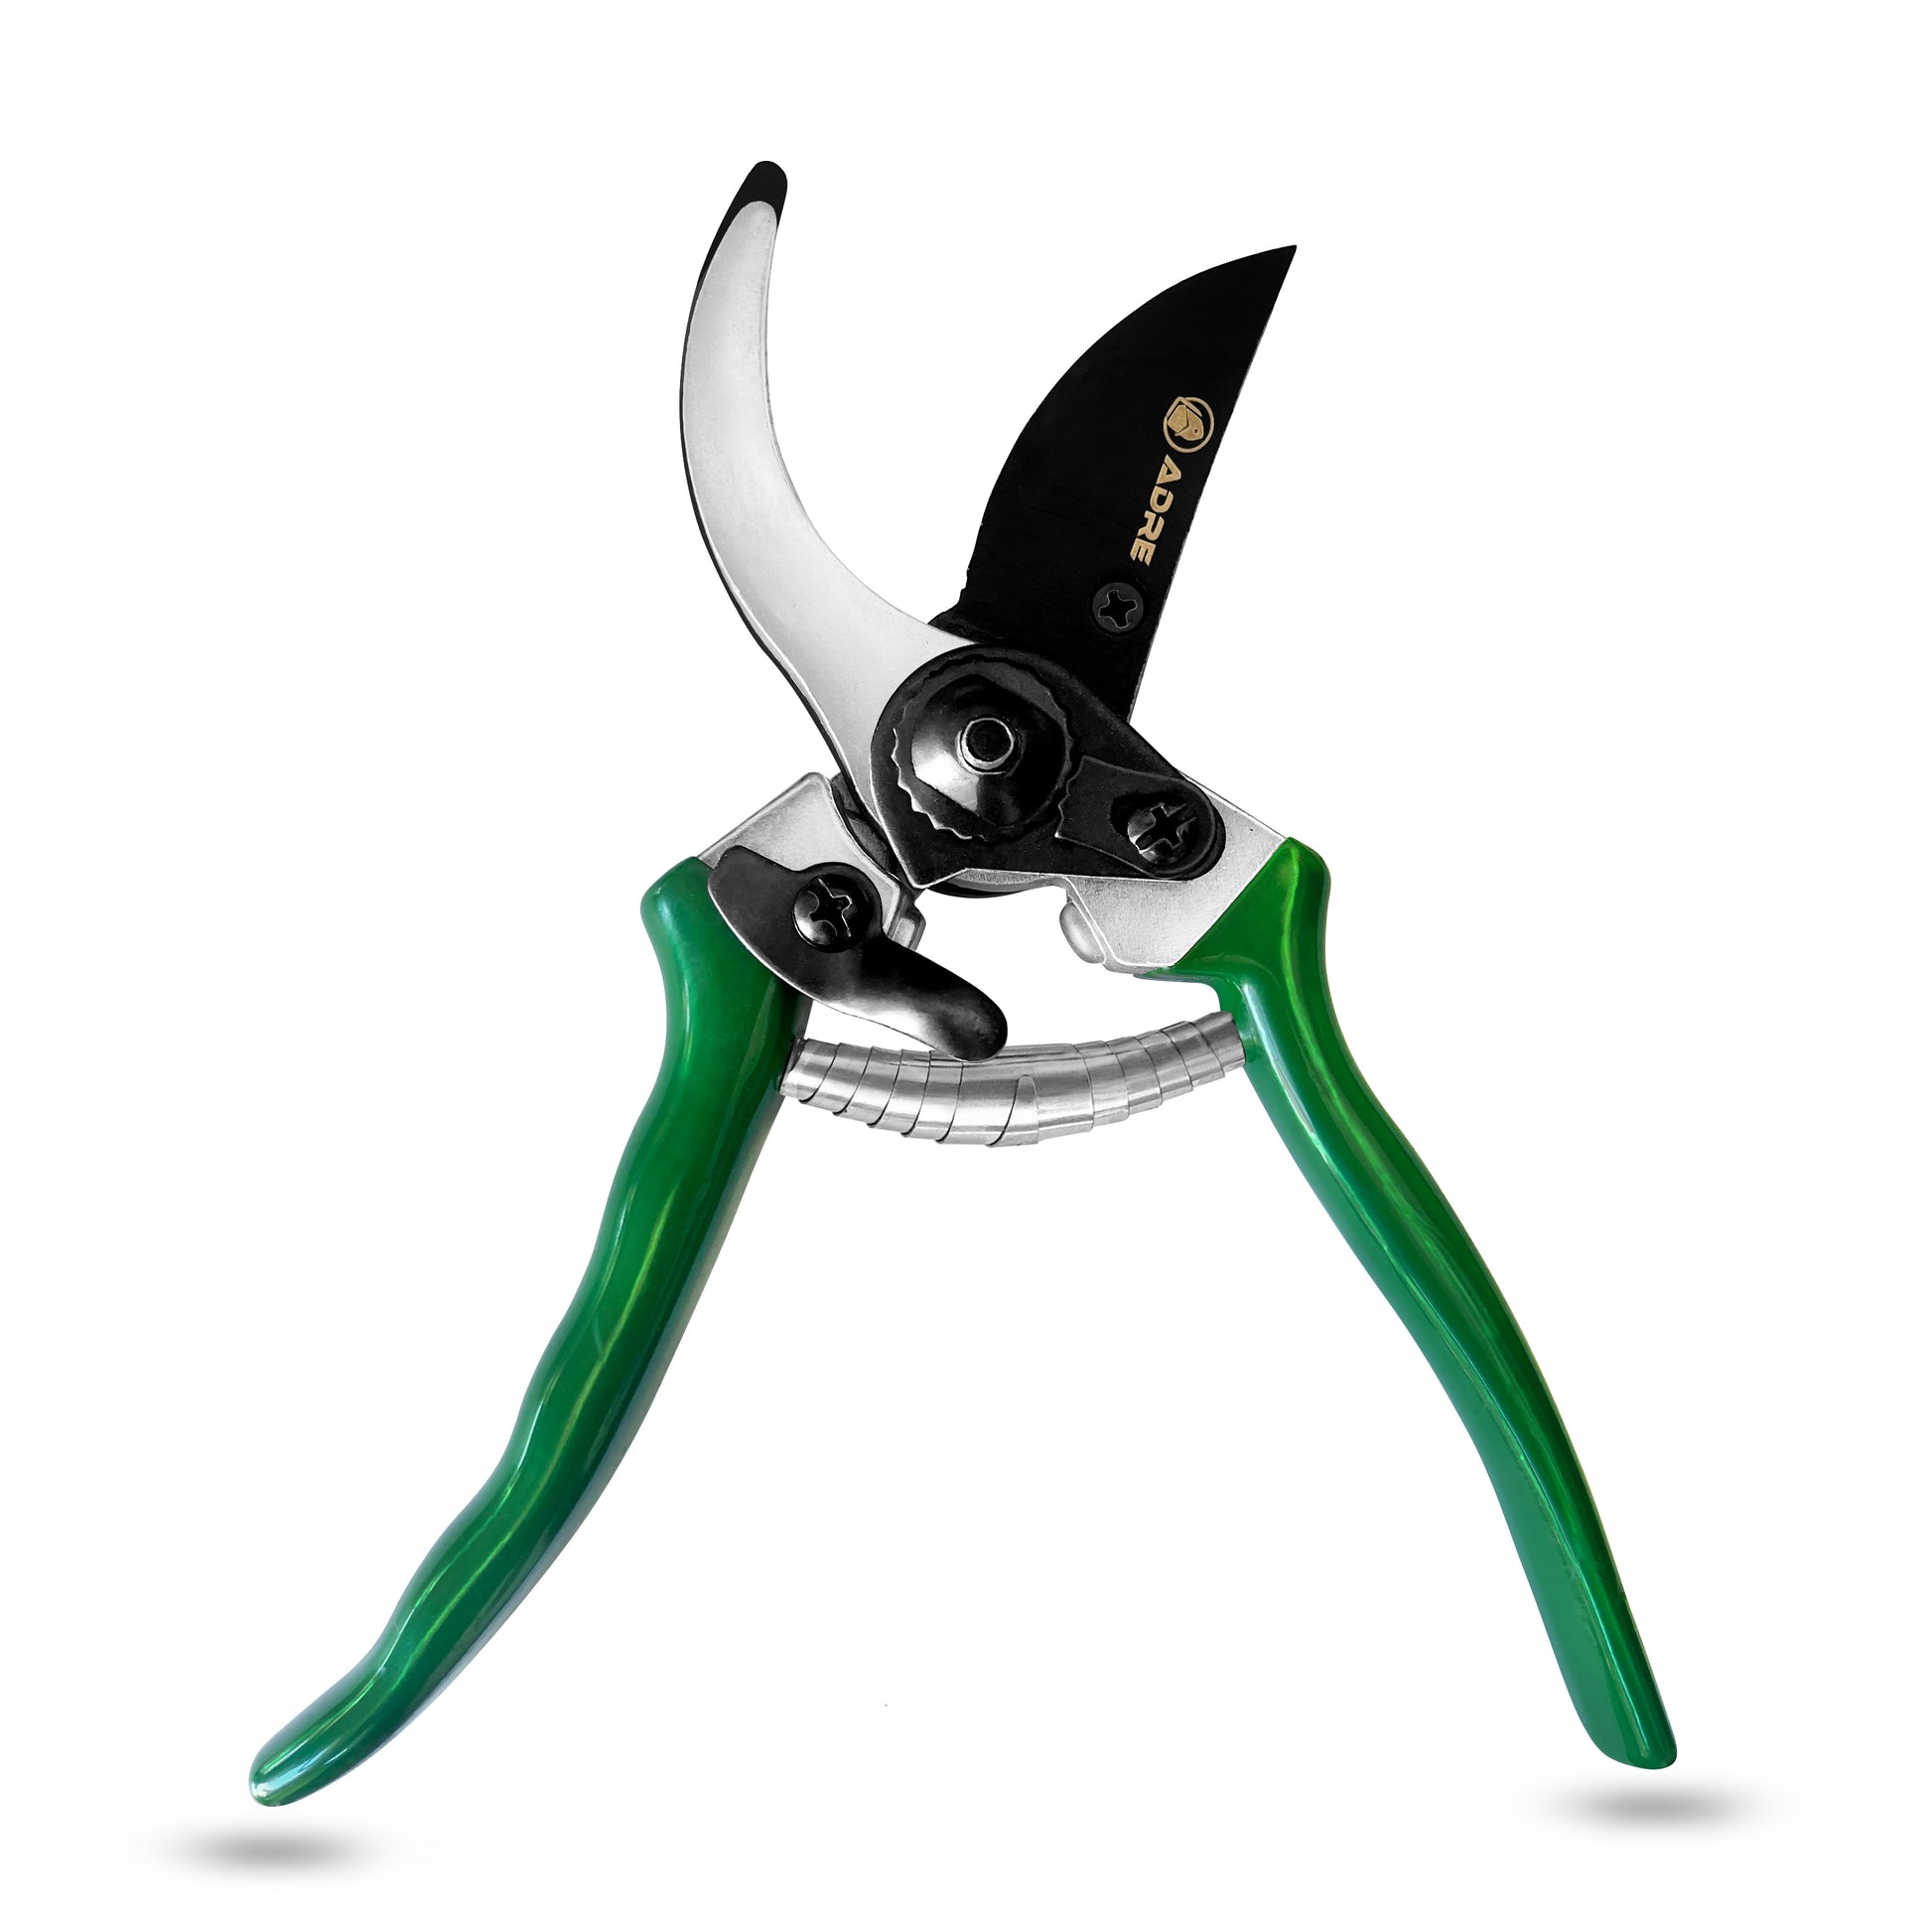 Adre Garden Tool Blade Cultivator Sharpener – Professional Carbide Kni –  ADRE